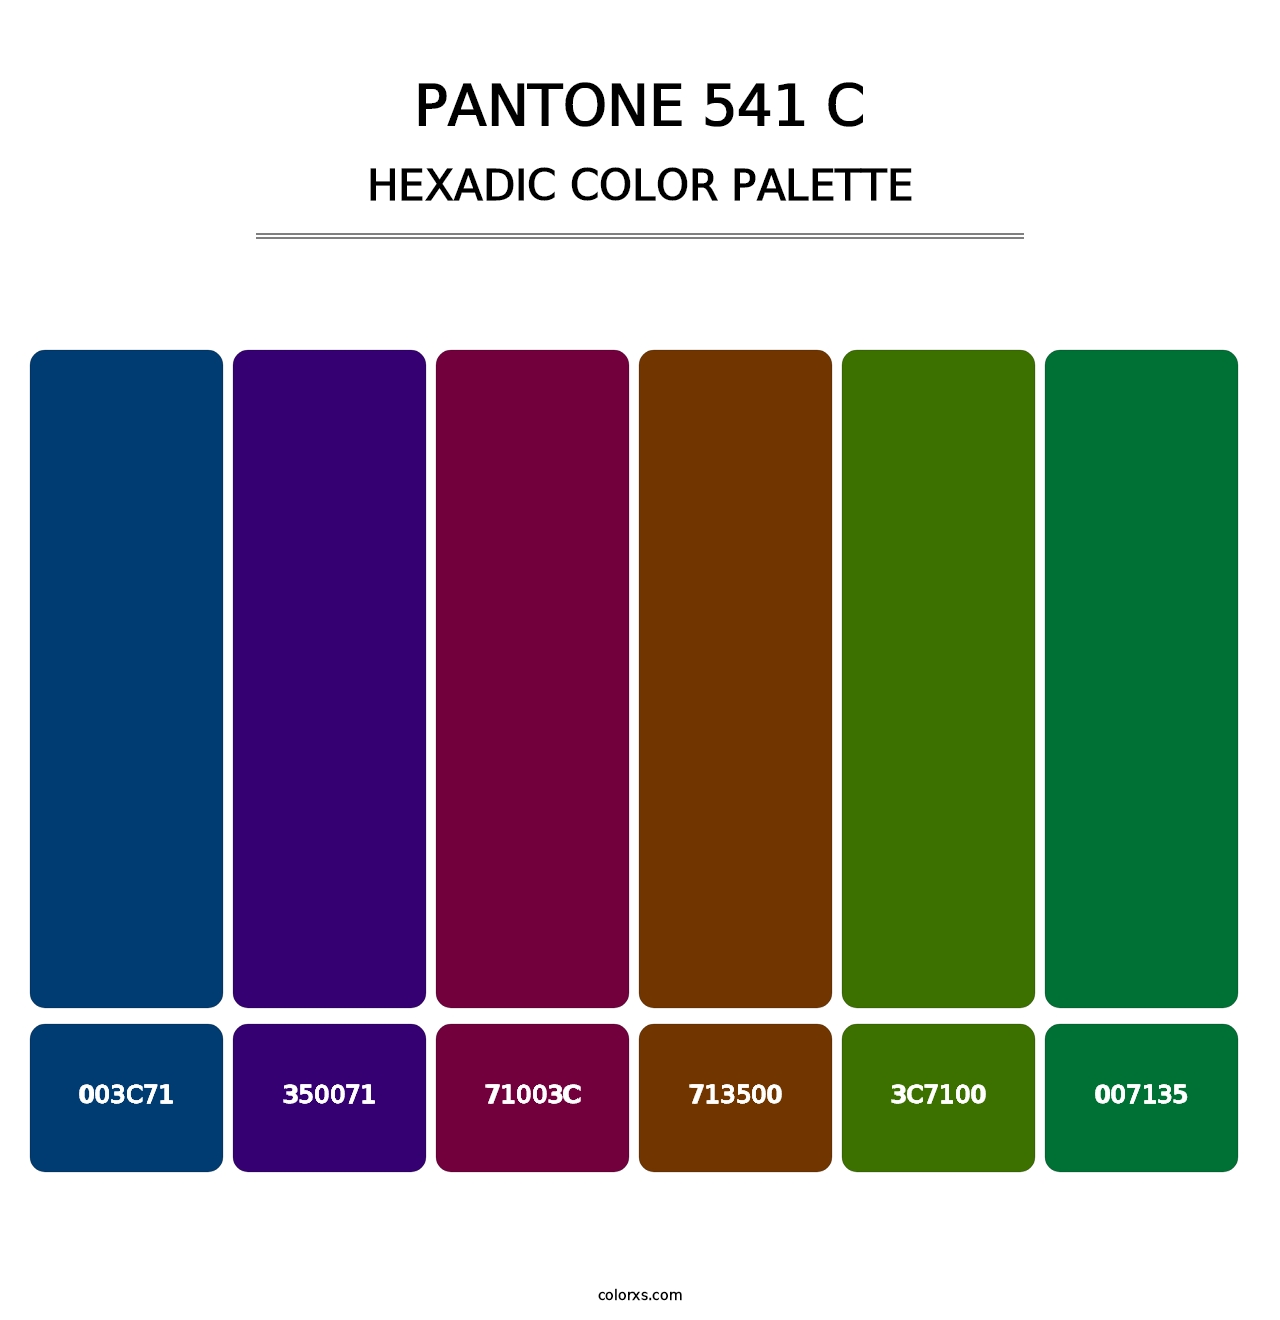 PANTONE 541 C - Hexadic Color Palette